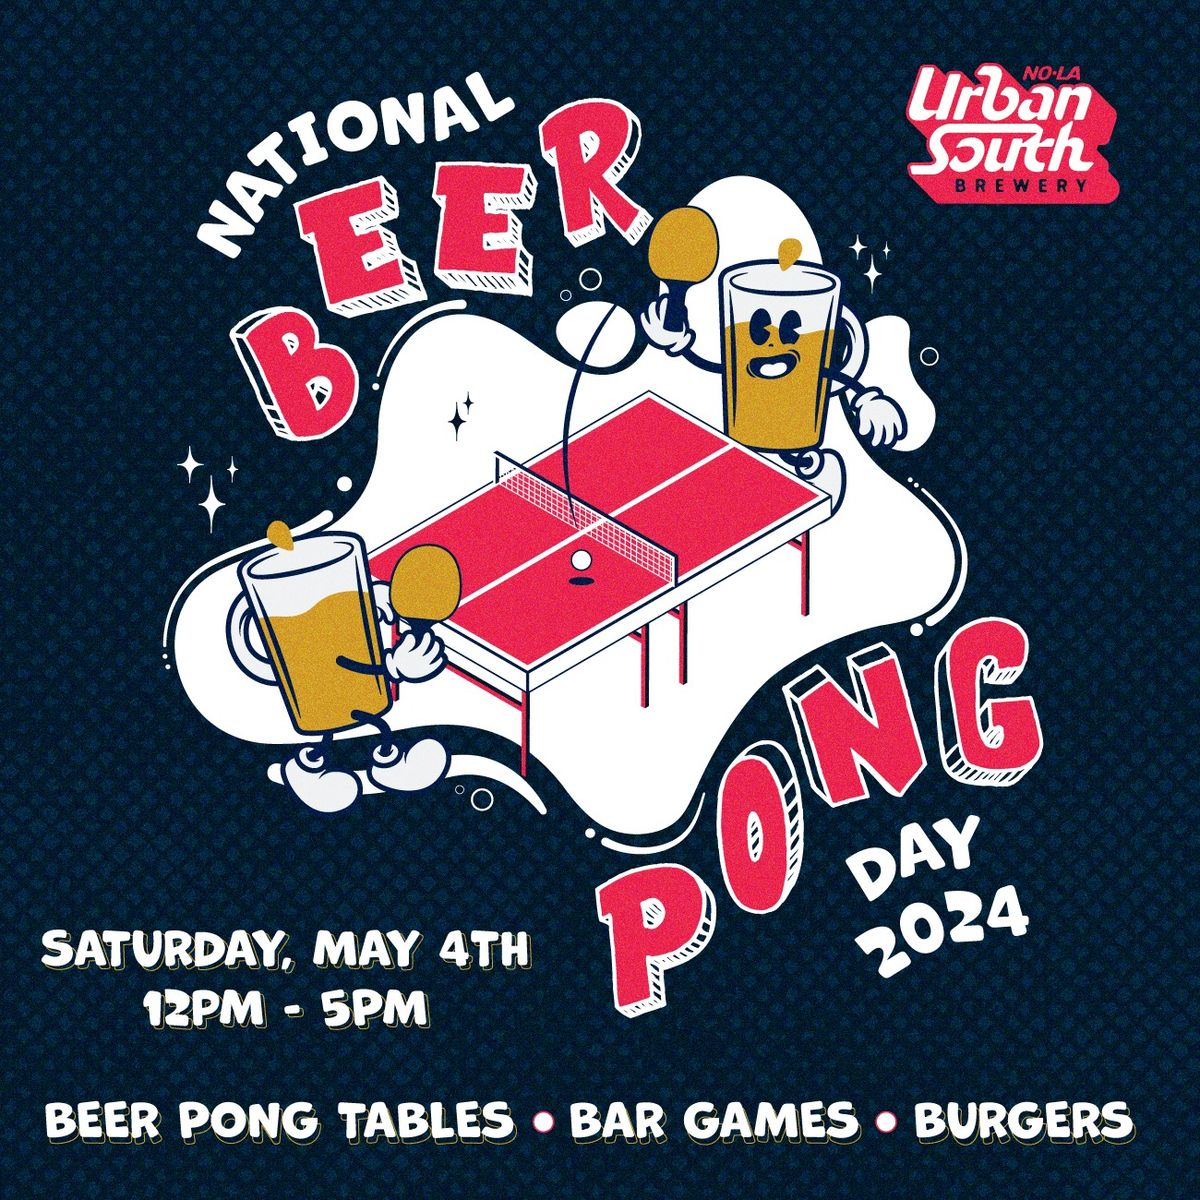 National Beer Pong Day at Urban South!